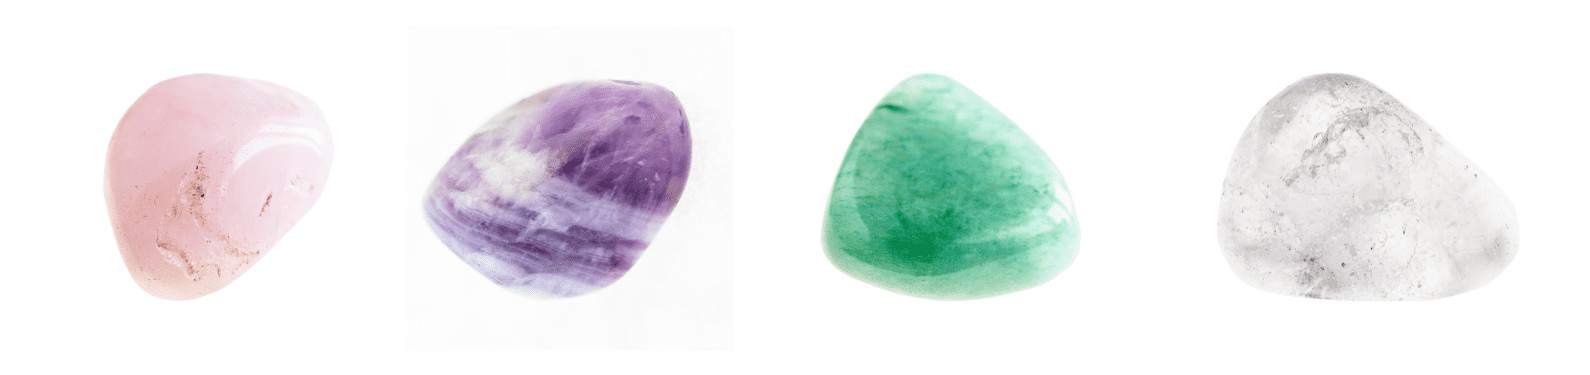 gemstones for baby: rose quartz - amethyst - green aventurine - crystal quartz